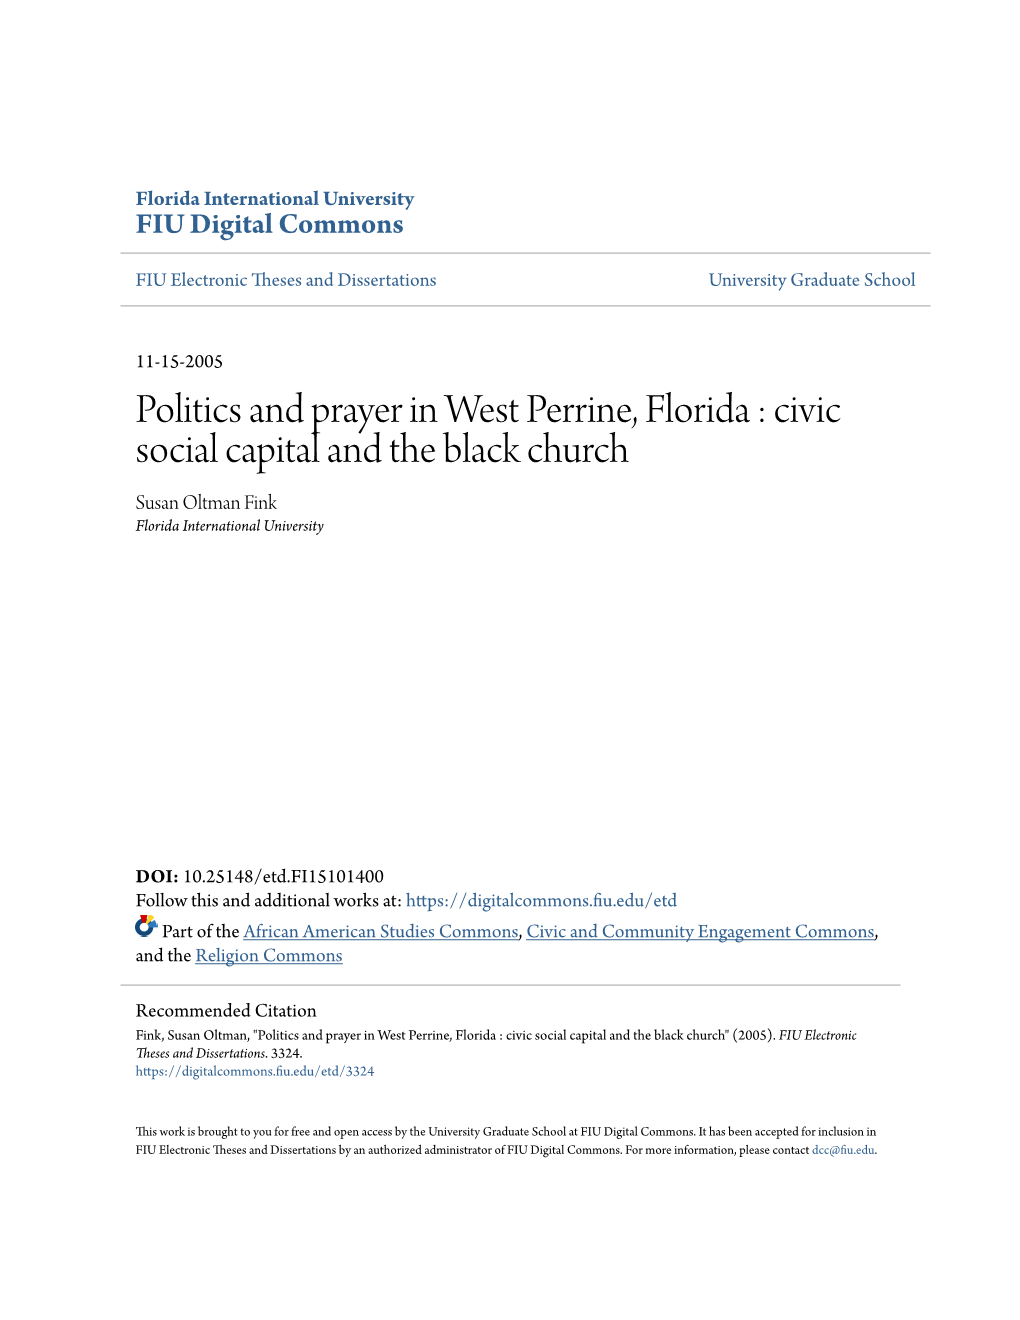 Politics and Prayer in West Perrine, Florida : Civic Social Capital and the Black Church Susan Oltman Fink Florida International University